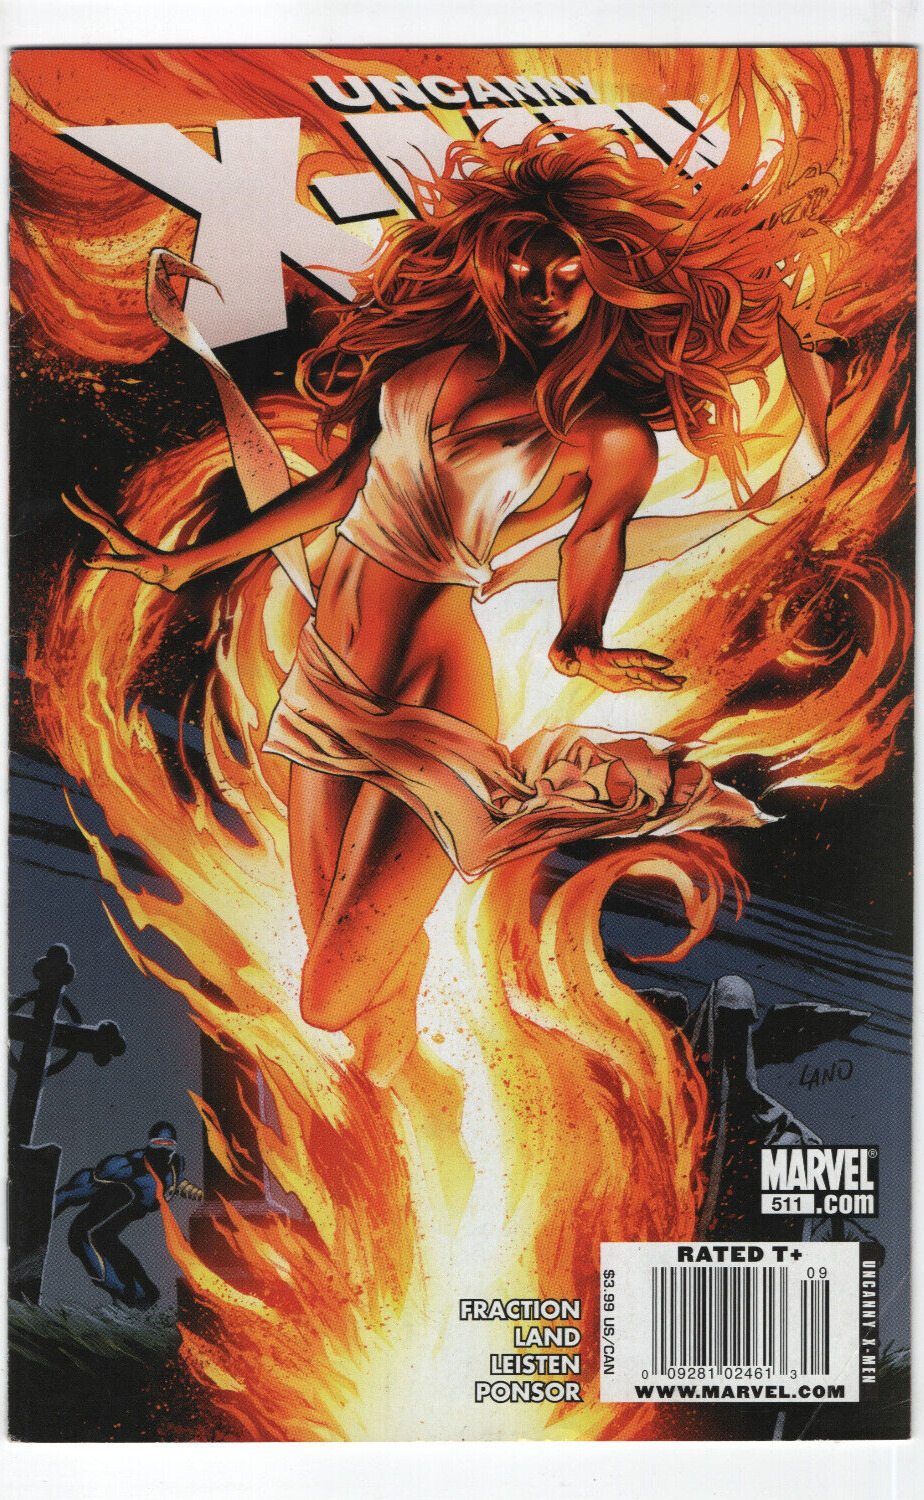 Uncanny XMen #511 2009 Marvel Comic Phoenix Newsstand Variant GGA Good Girl Art